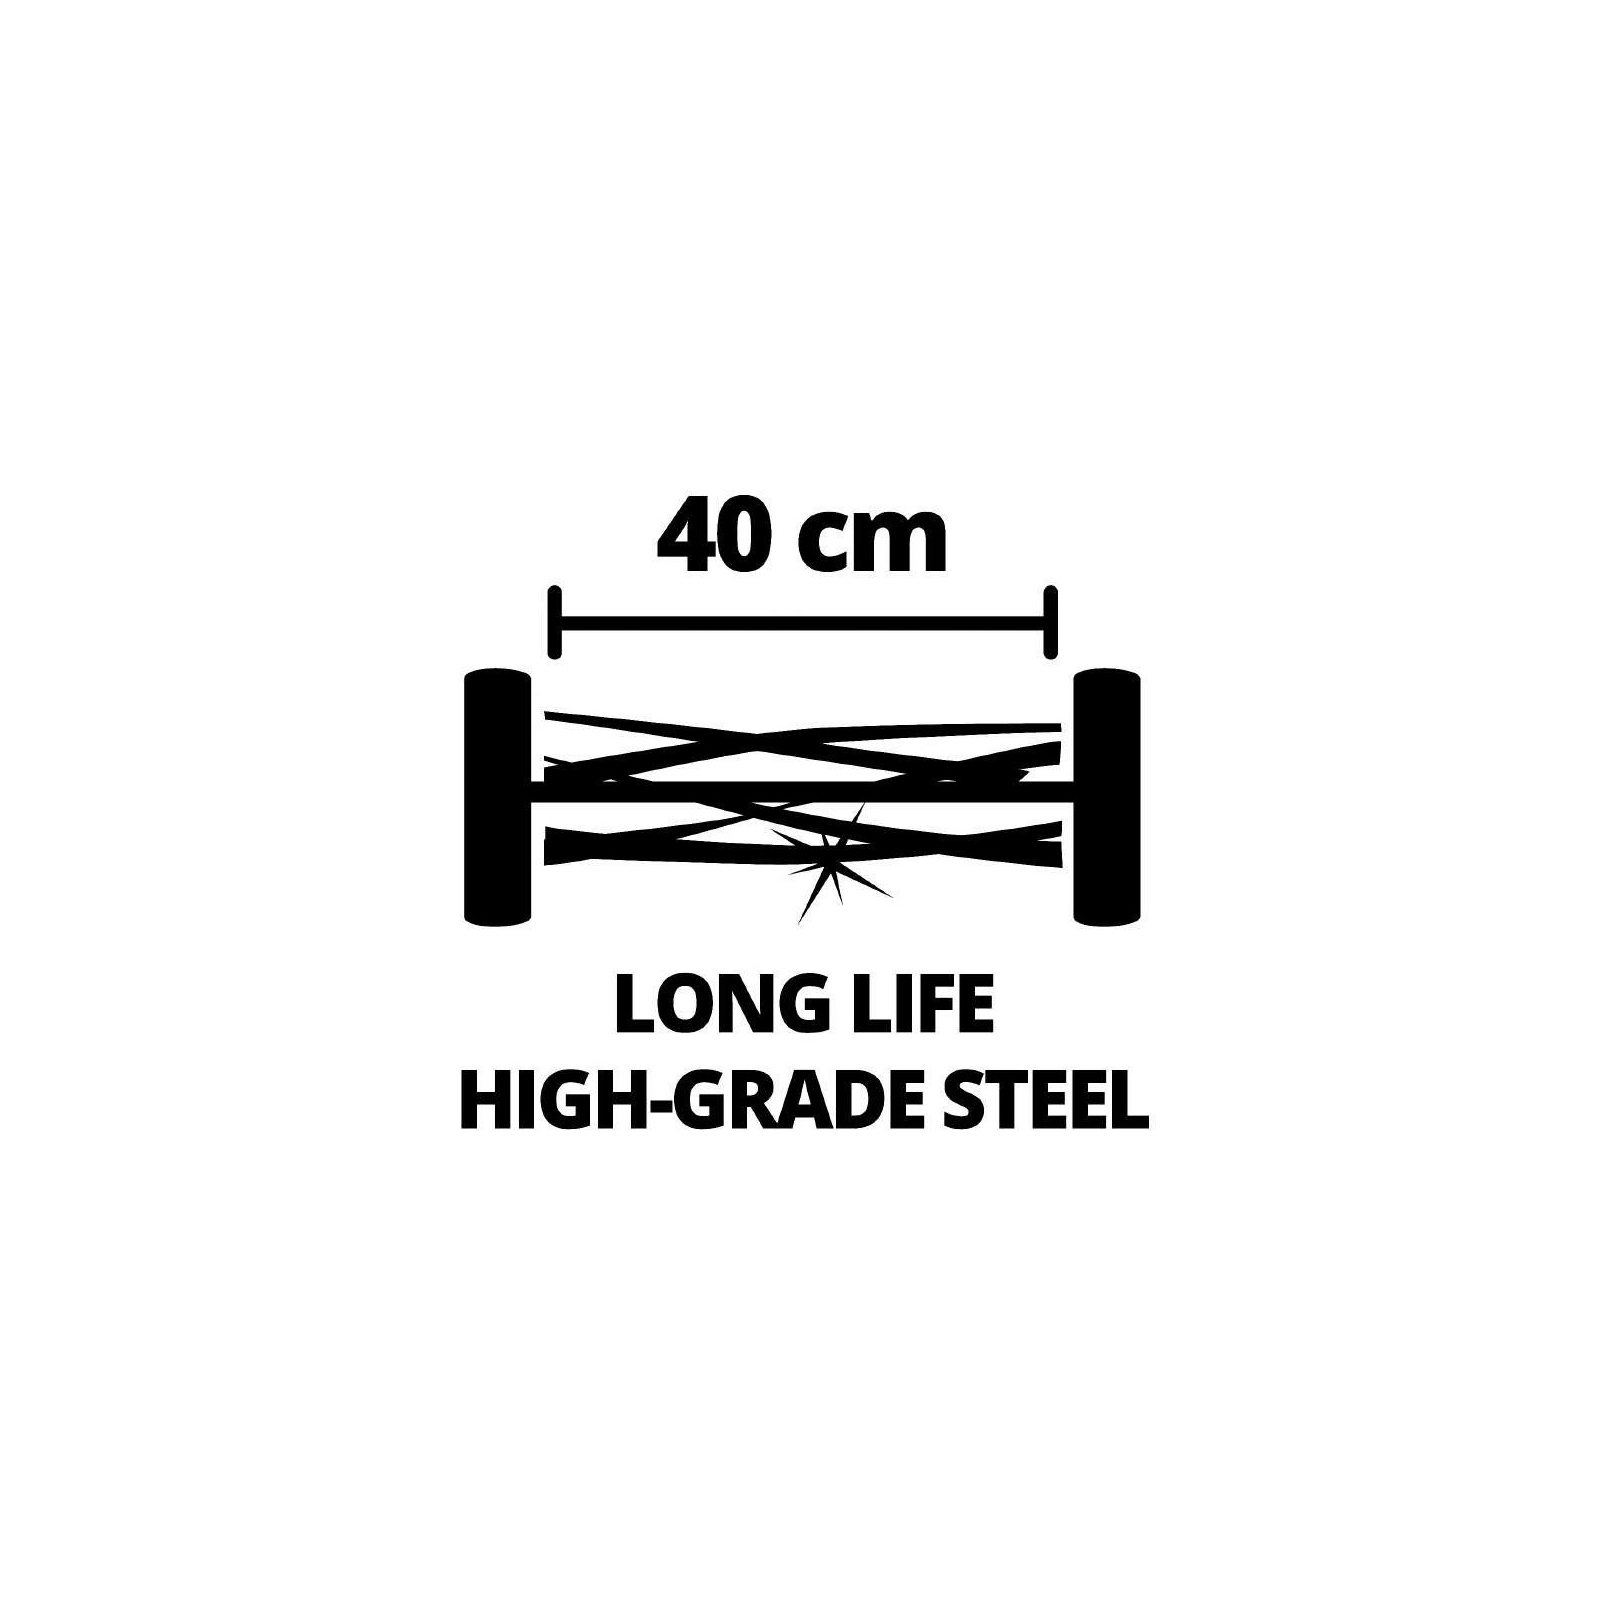 Газонокосарка Einhell GC-HM 400, 40 см, 13-37 мм, 27 л, 7.5 кг (3414129) зображення 9